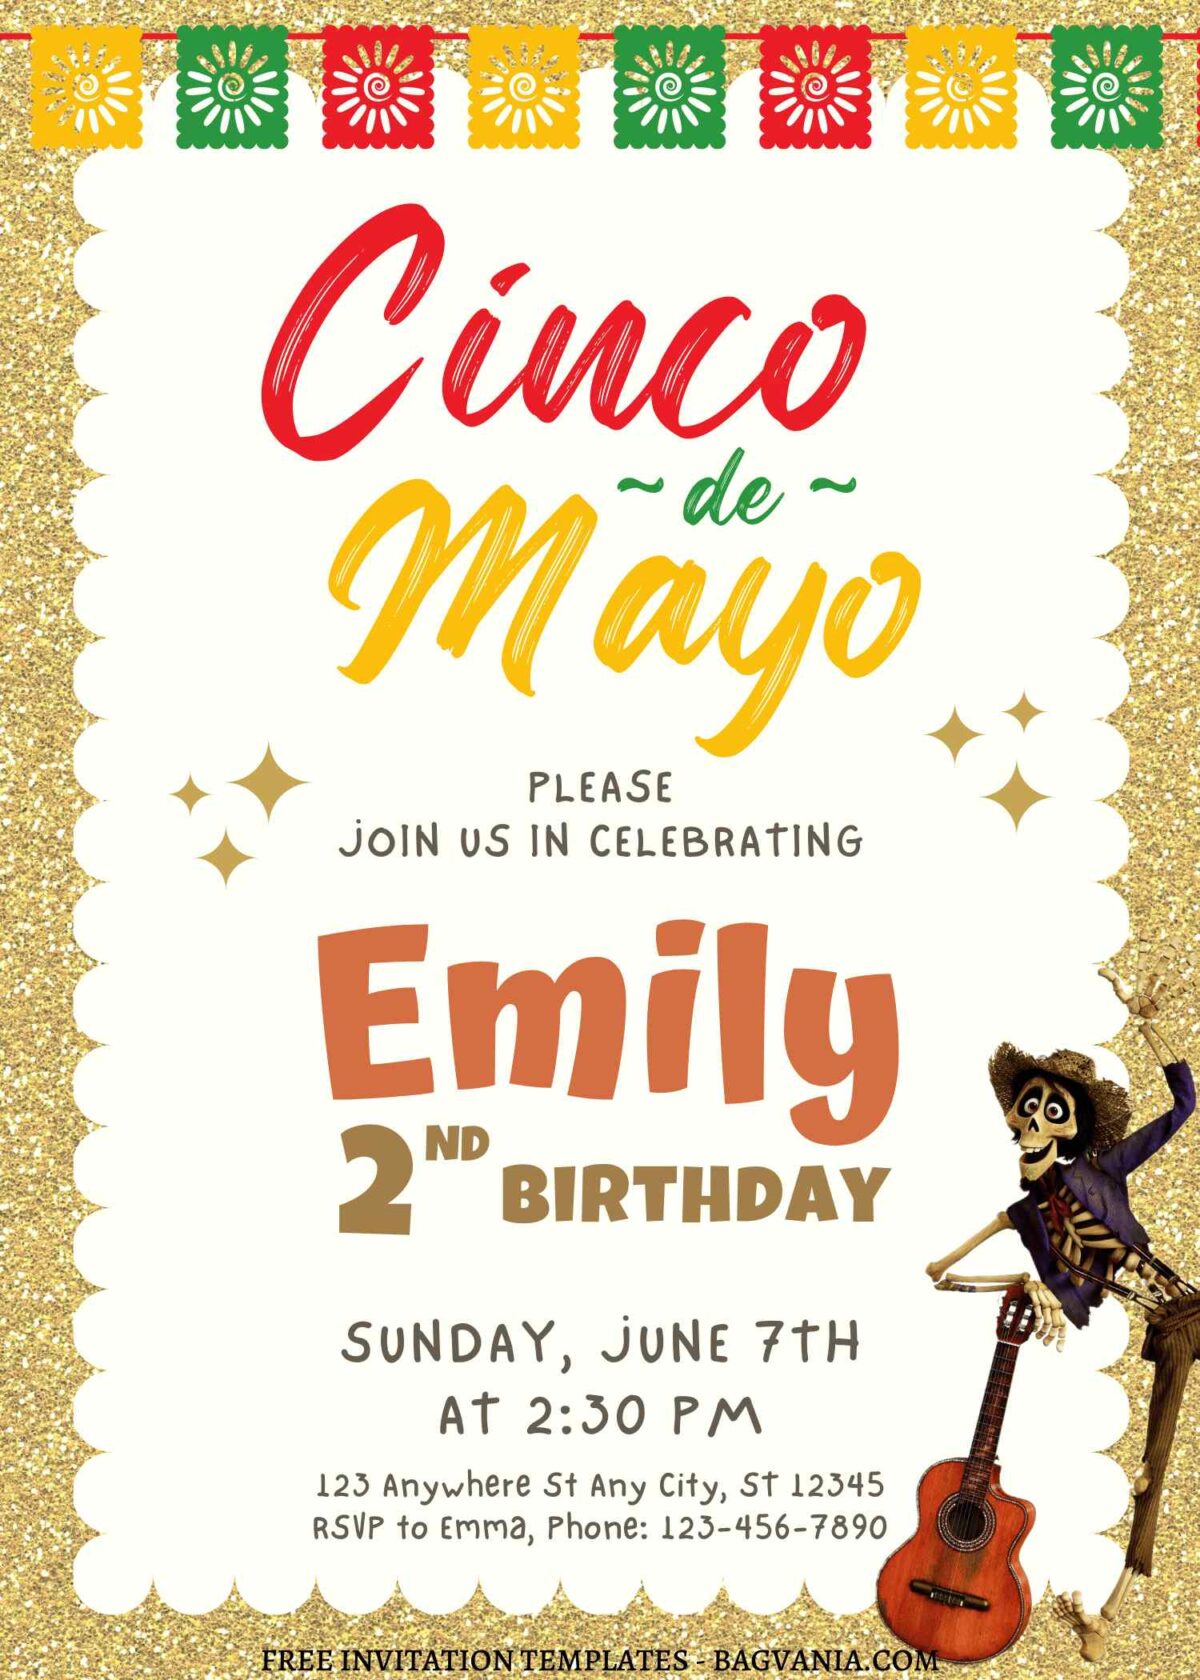 10+ Mexican Disney Coco Fiesta Canva Birthday Invitation Templates with Colorful papel picado